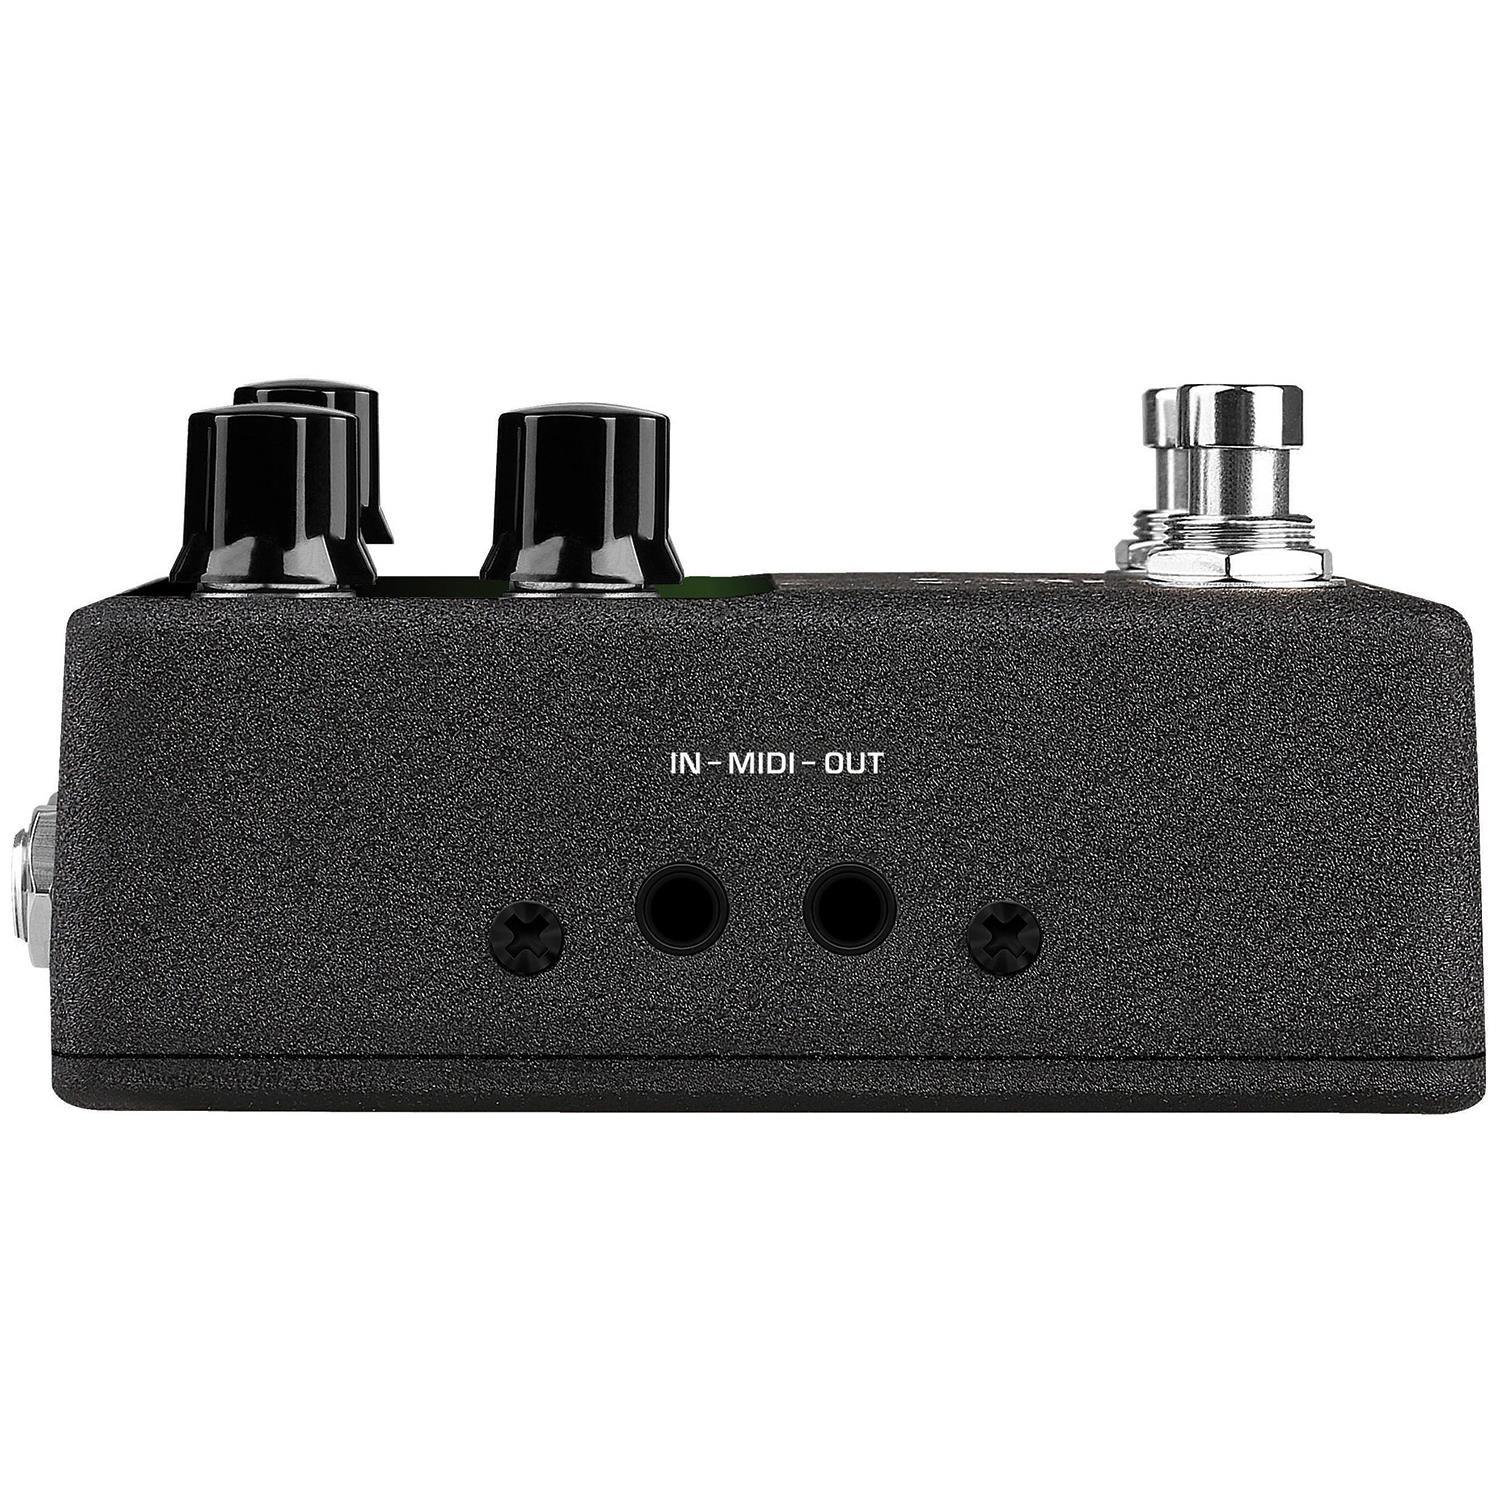 NUX Tape Echo Pedal - DY Pro Audio